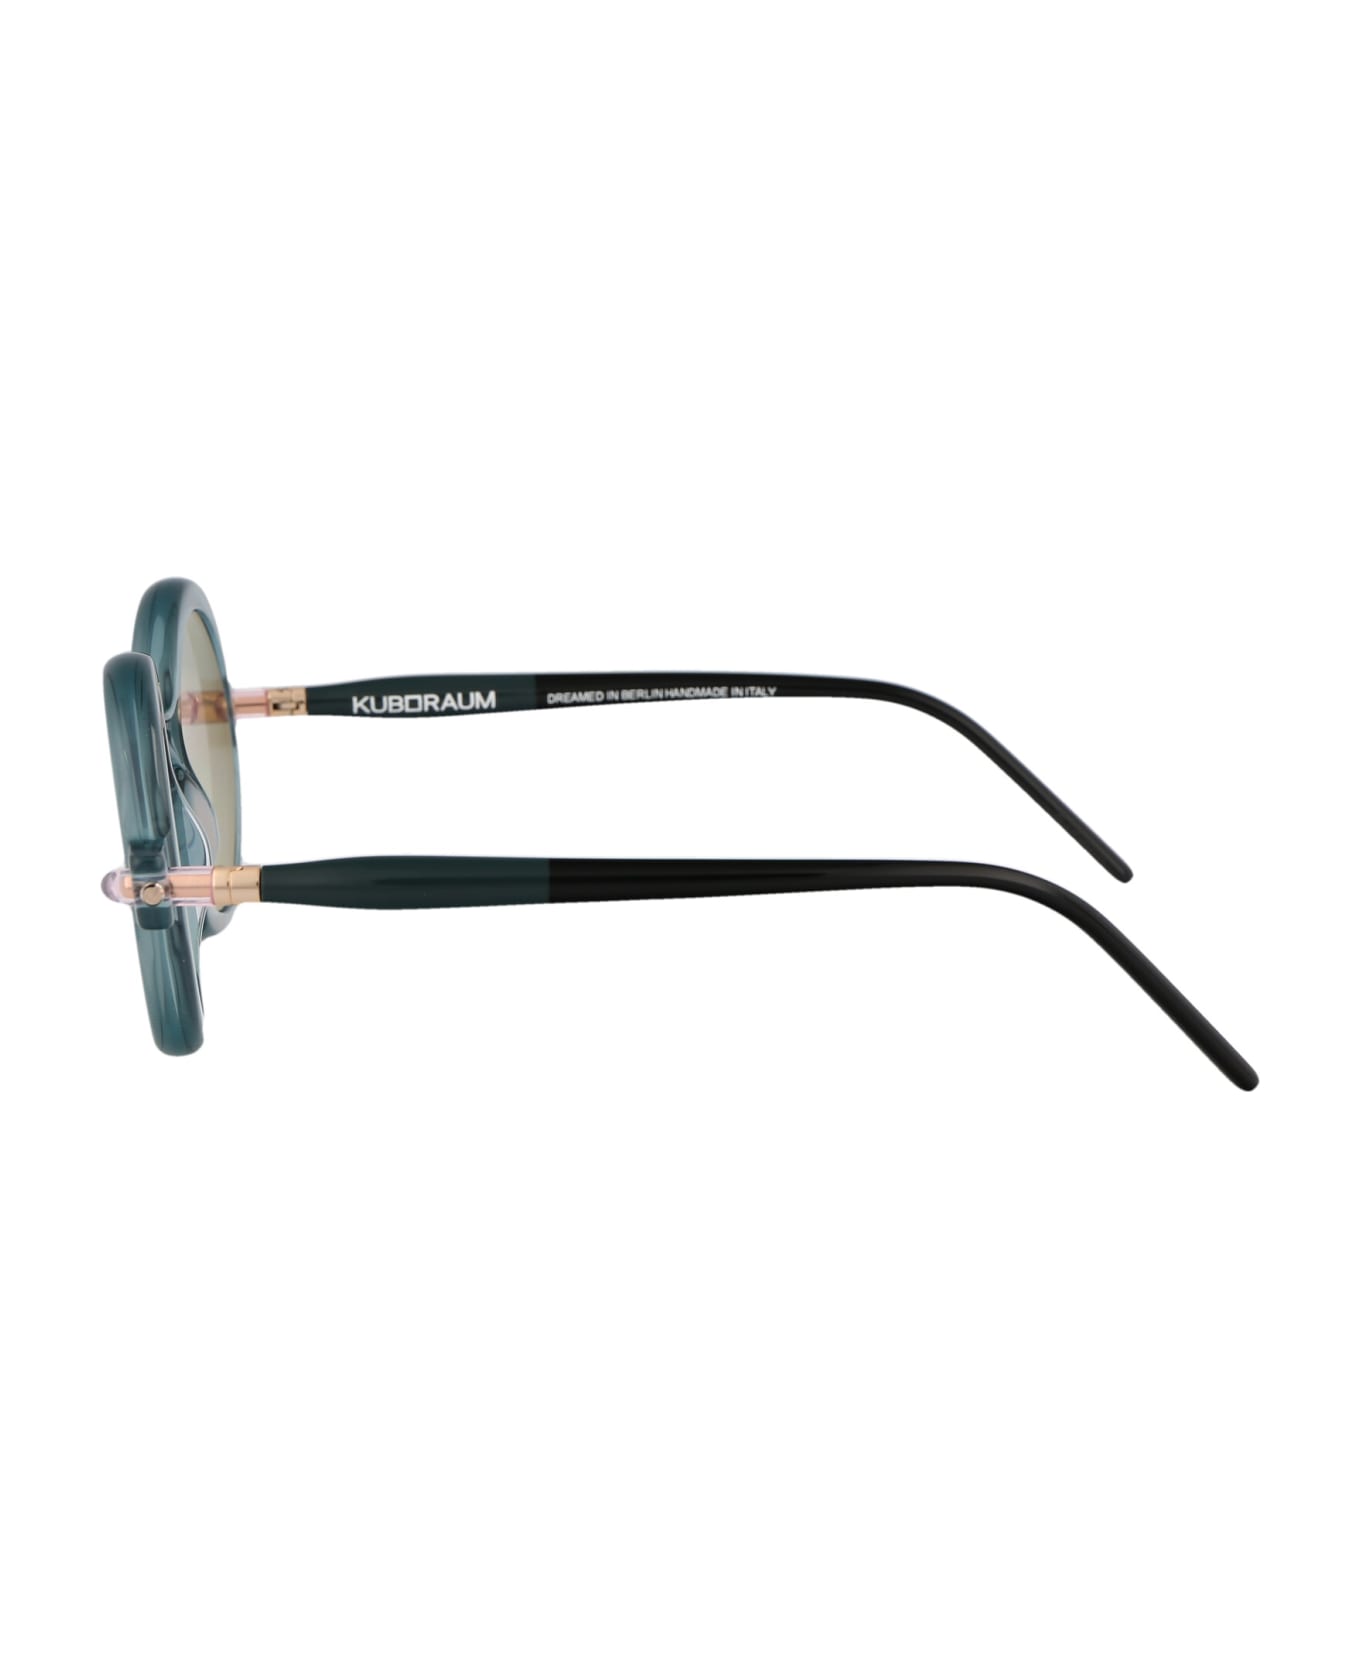 Kuboraum Maske P1 Sunglasses - MKG grey1* サングラス